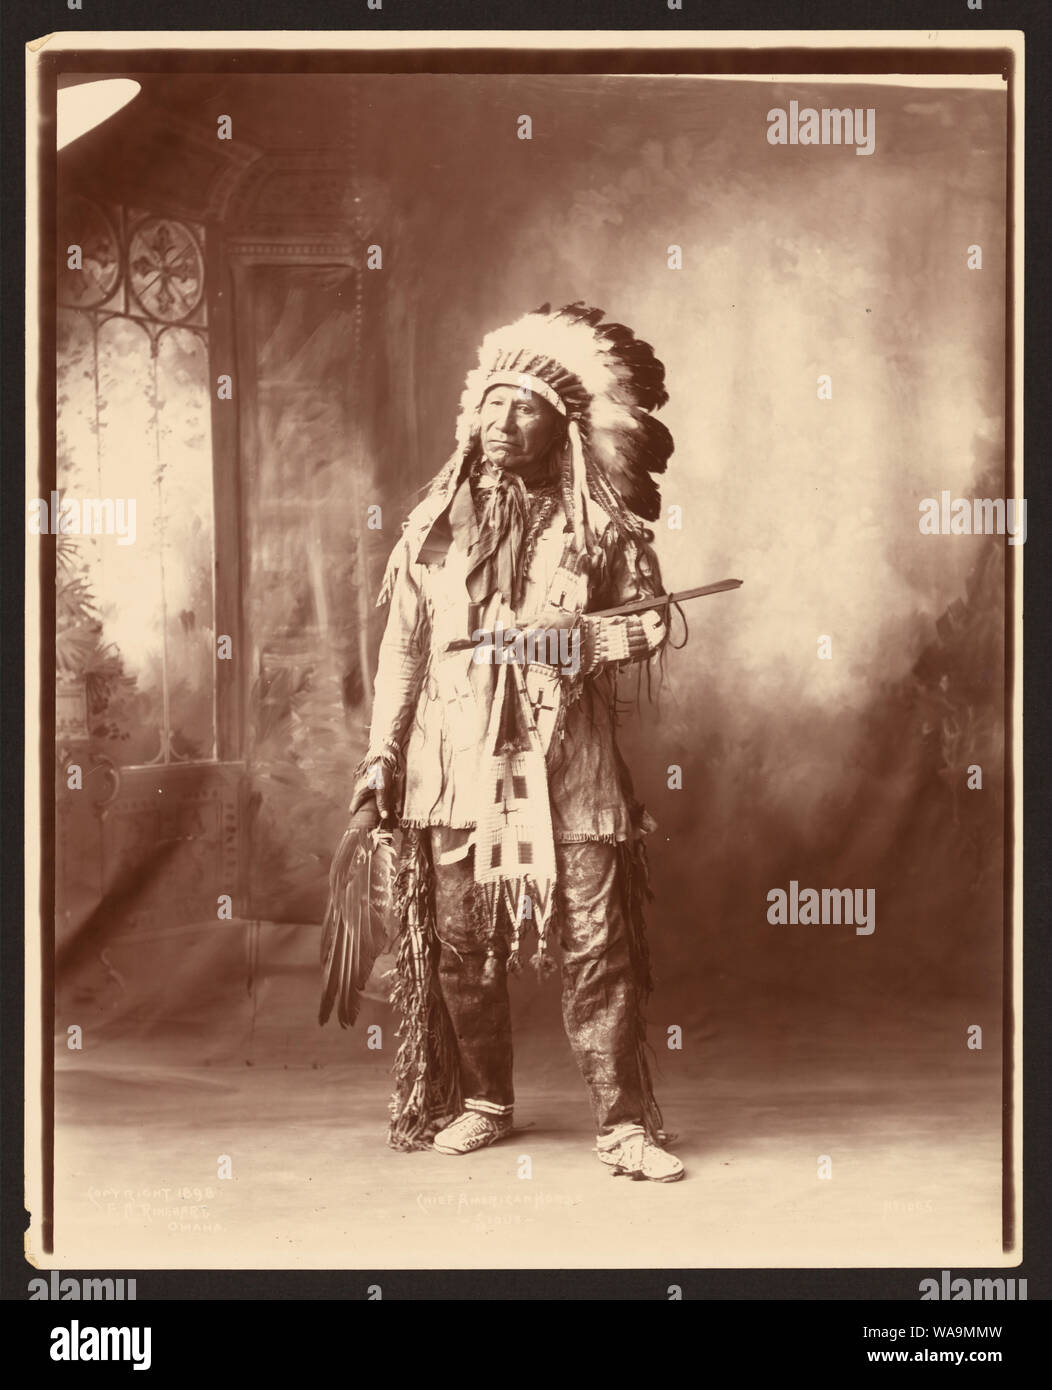 Chief American Horse - Sioux / F.A. Rinehart, Omaha. Stock Photo